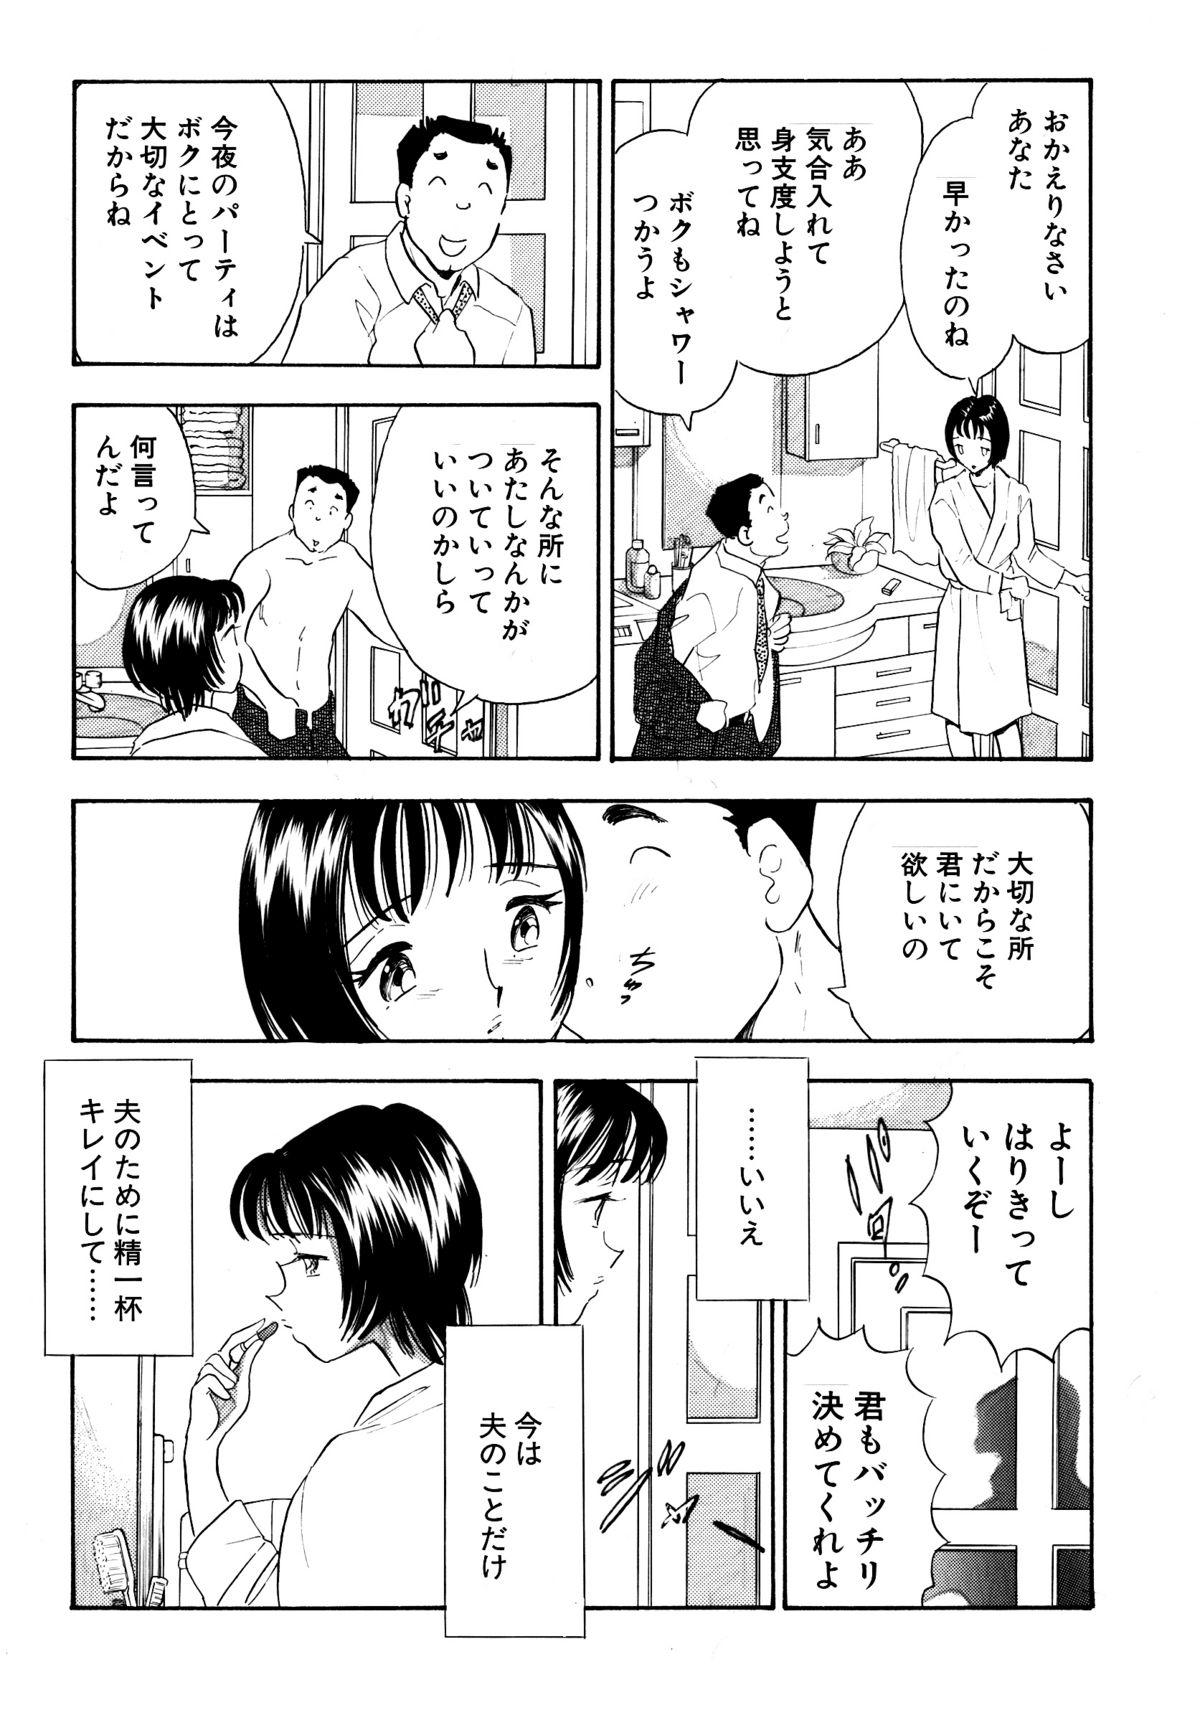 Ride Chijo tsuma 13 3way - Page 5